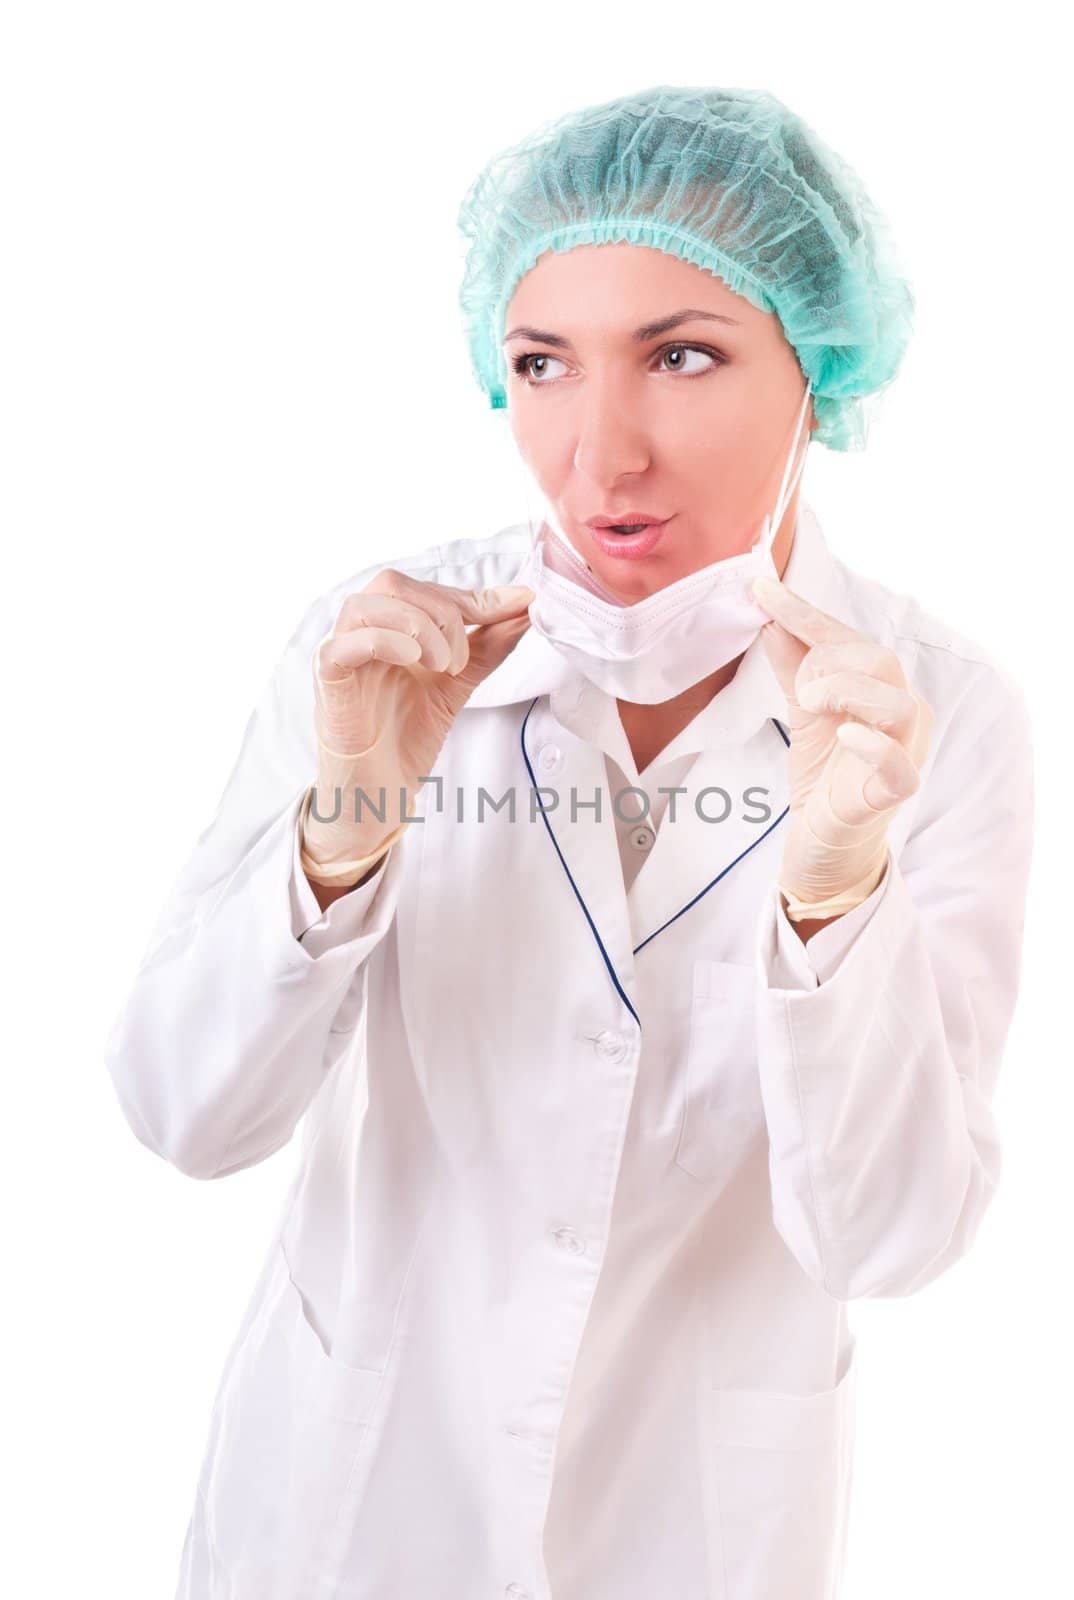 Surprised woman in medical uniform by iryna_rasko